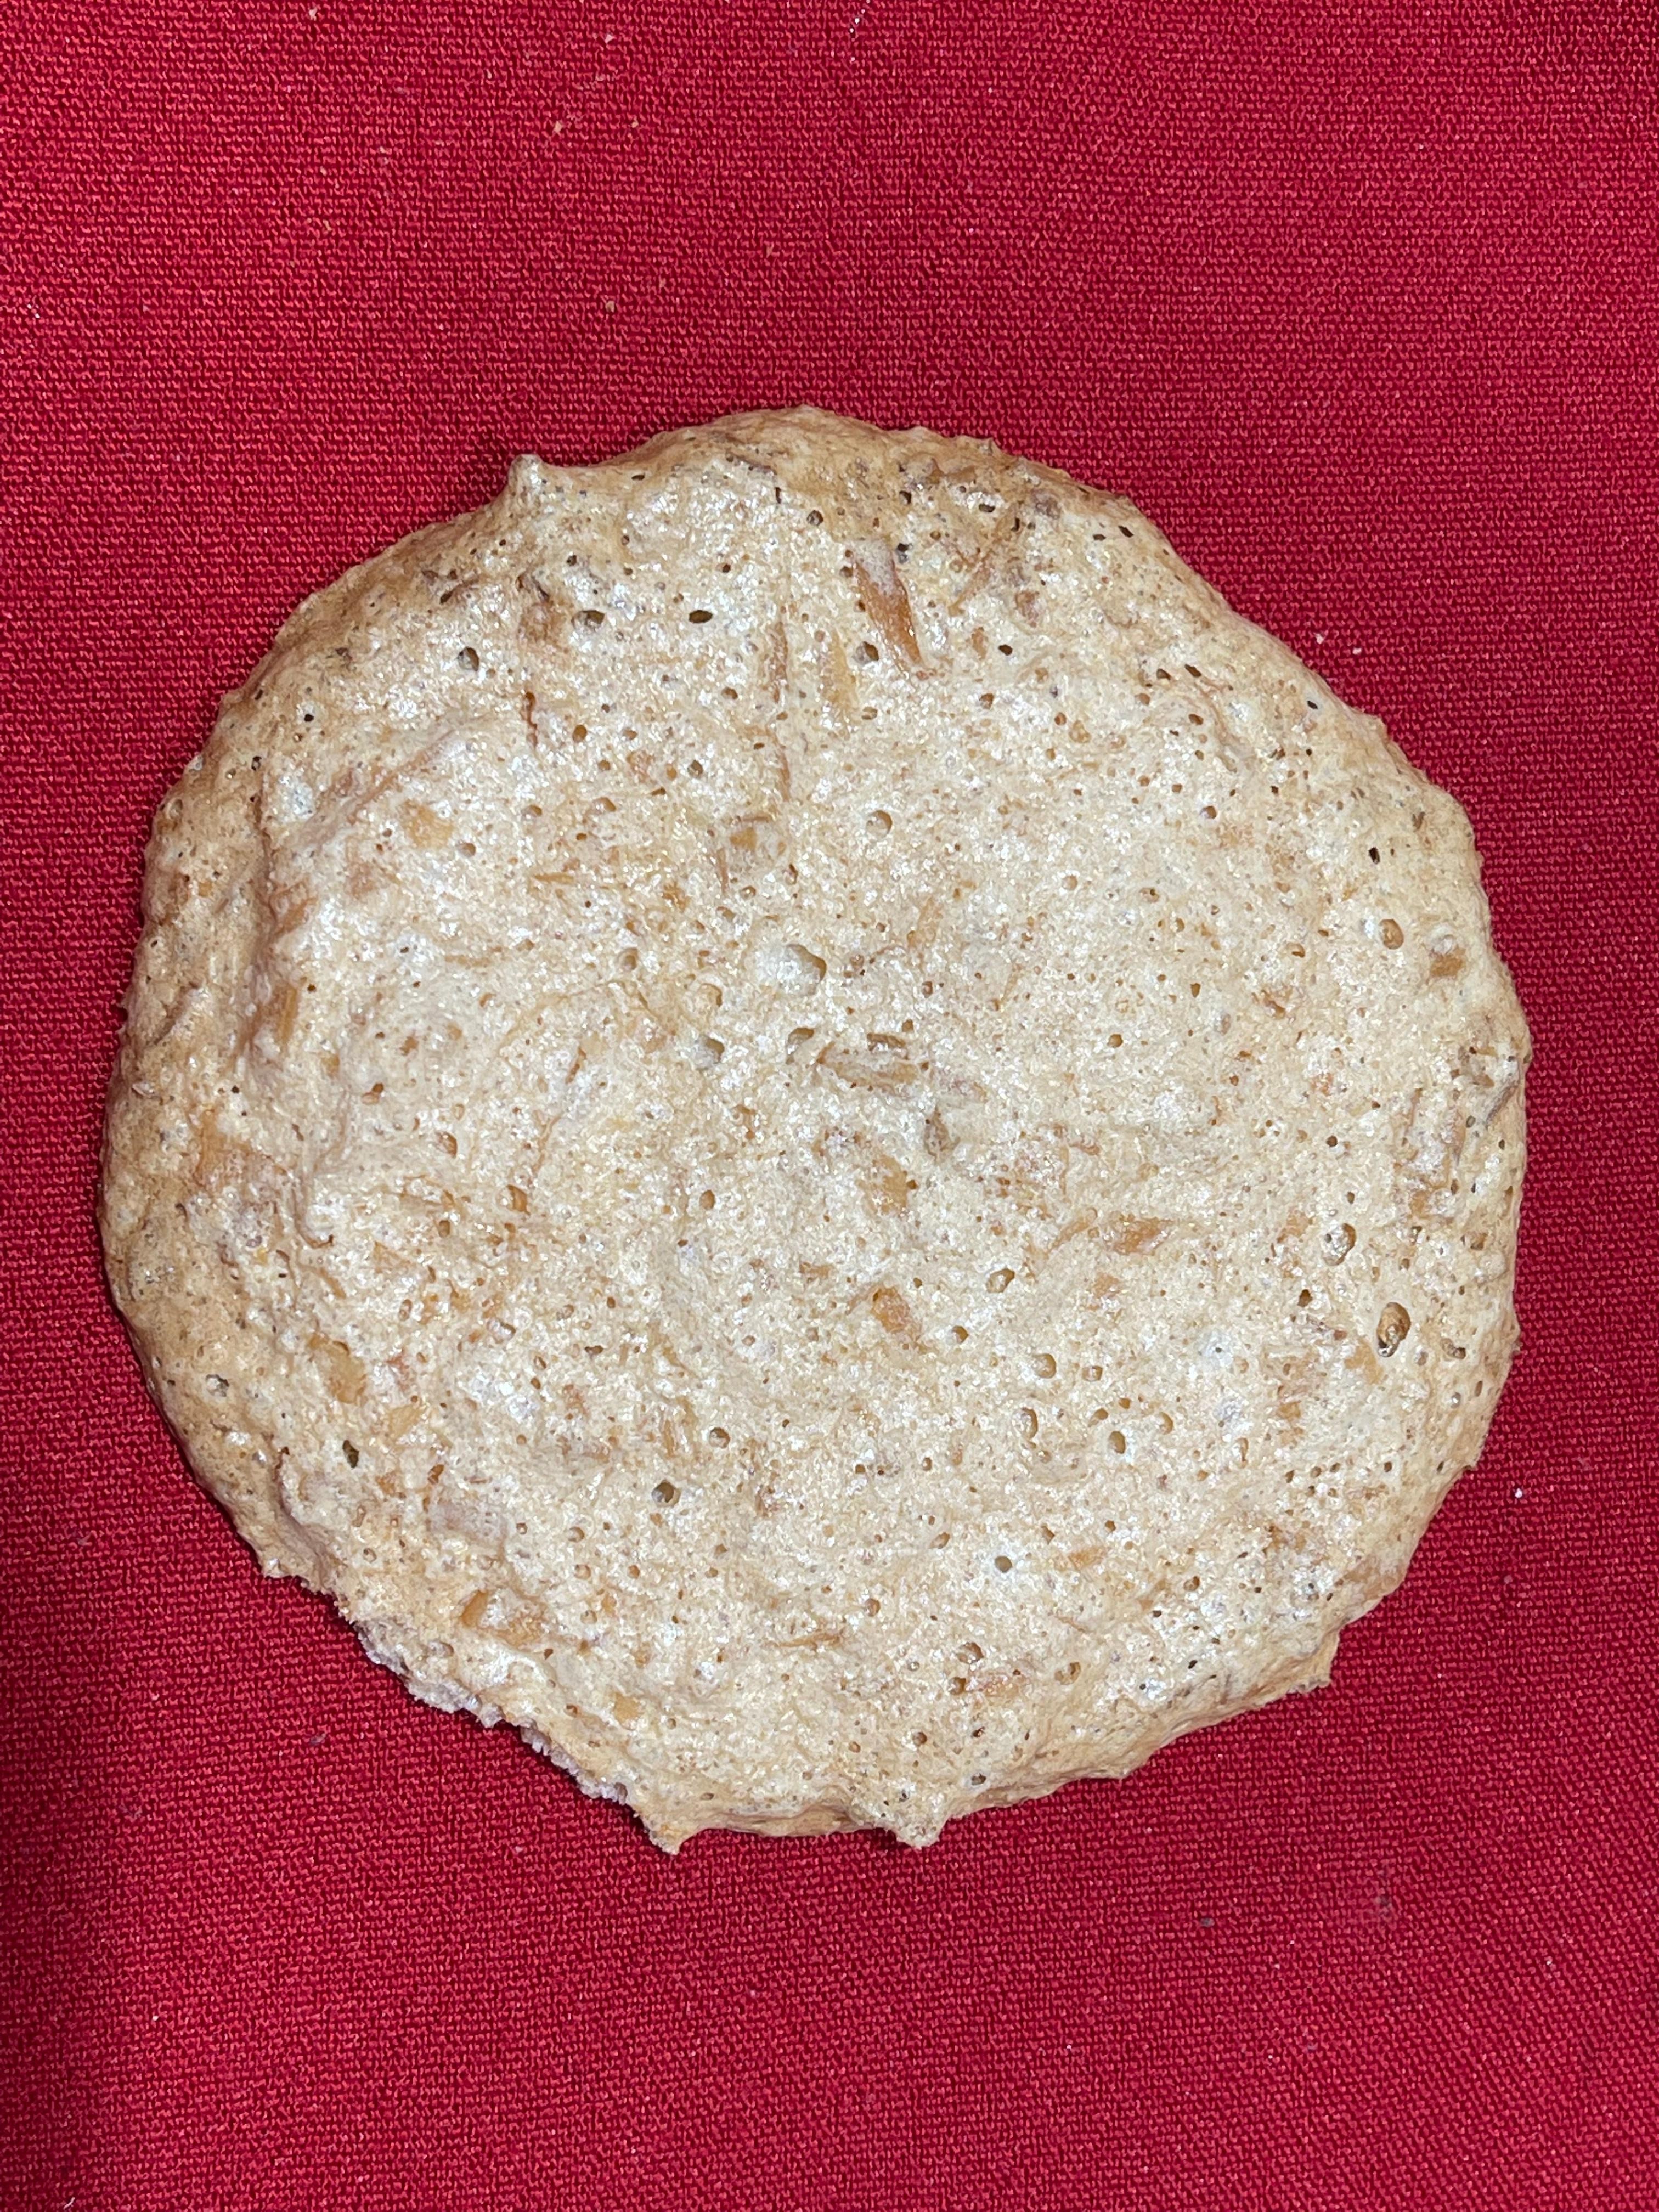 Coconut Dry Cookie